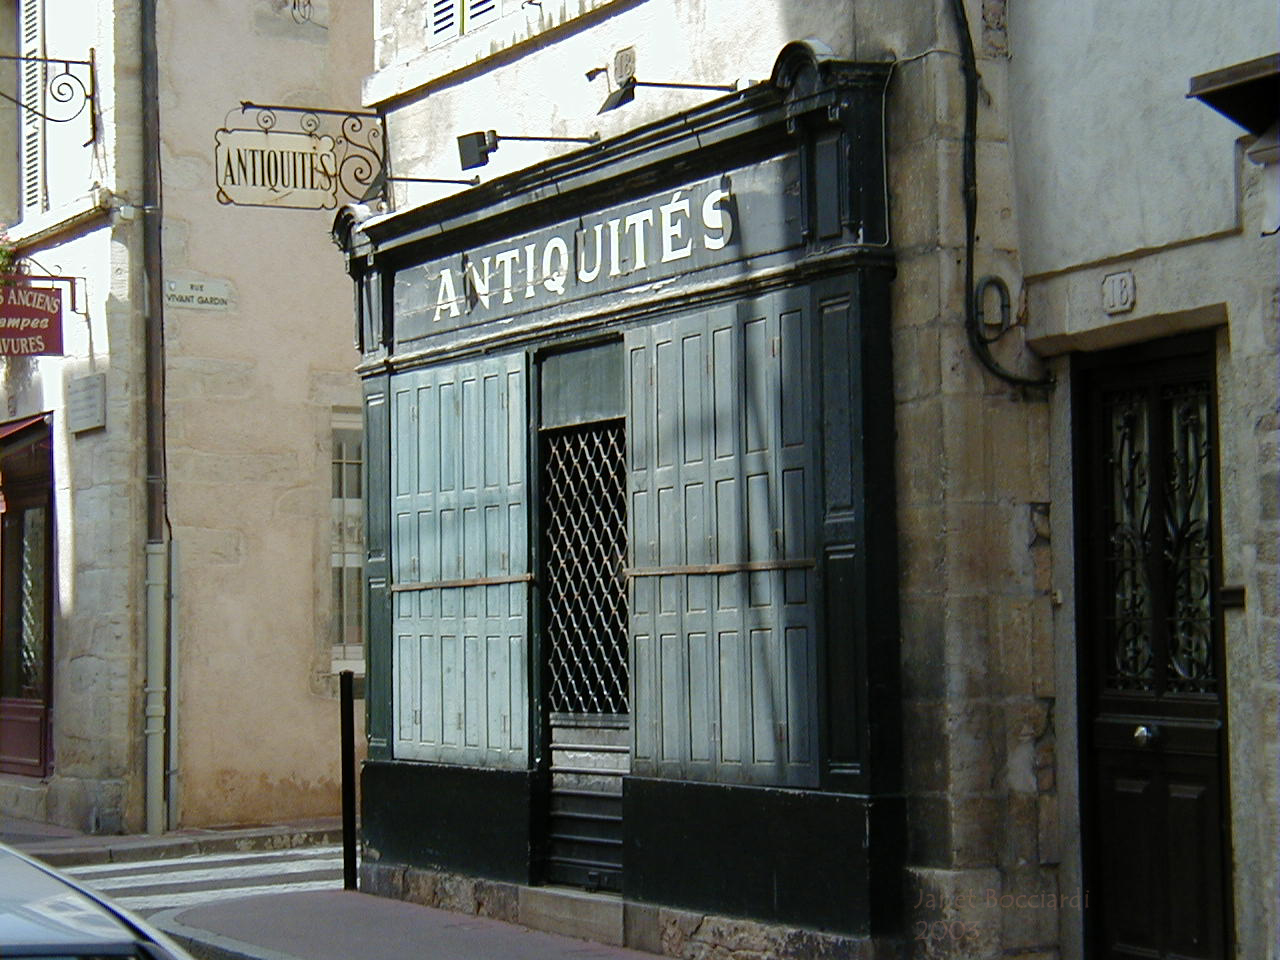 Antique shop in Beaune, France